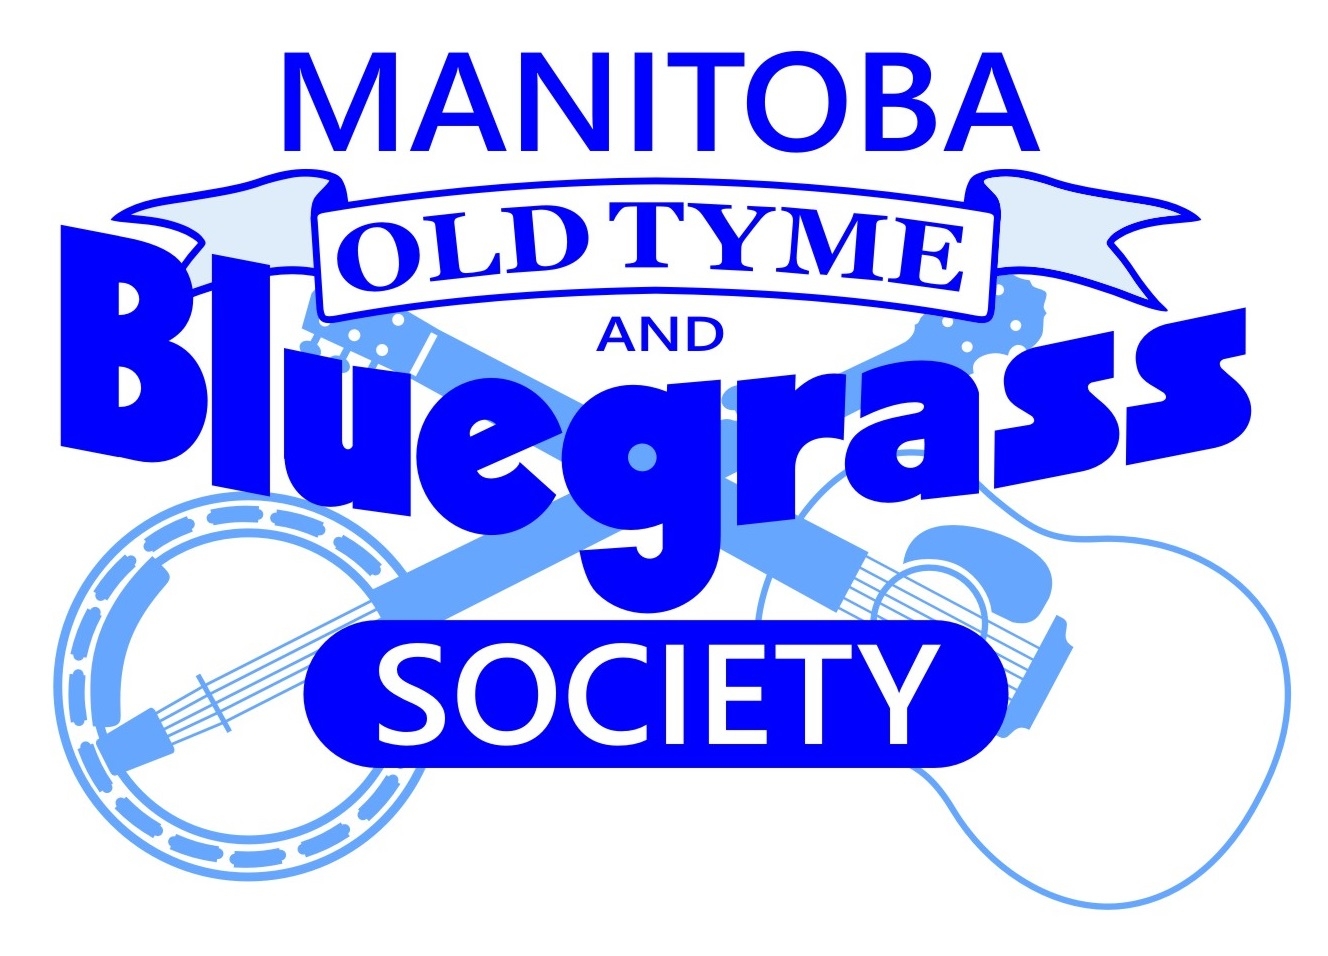 Manitoba OldTyme and Bluegrass Society